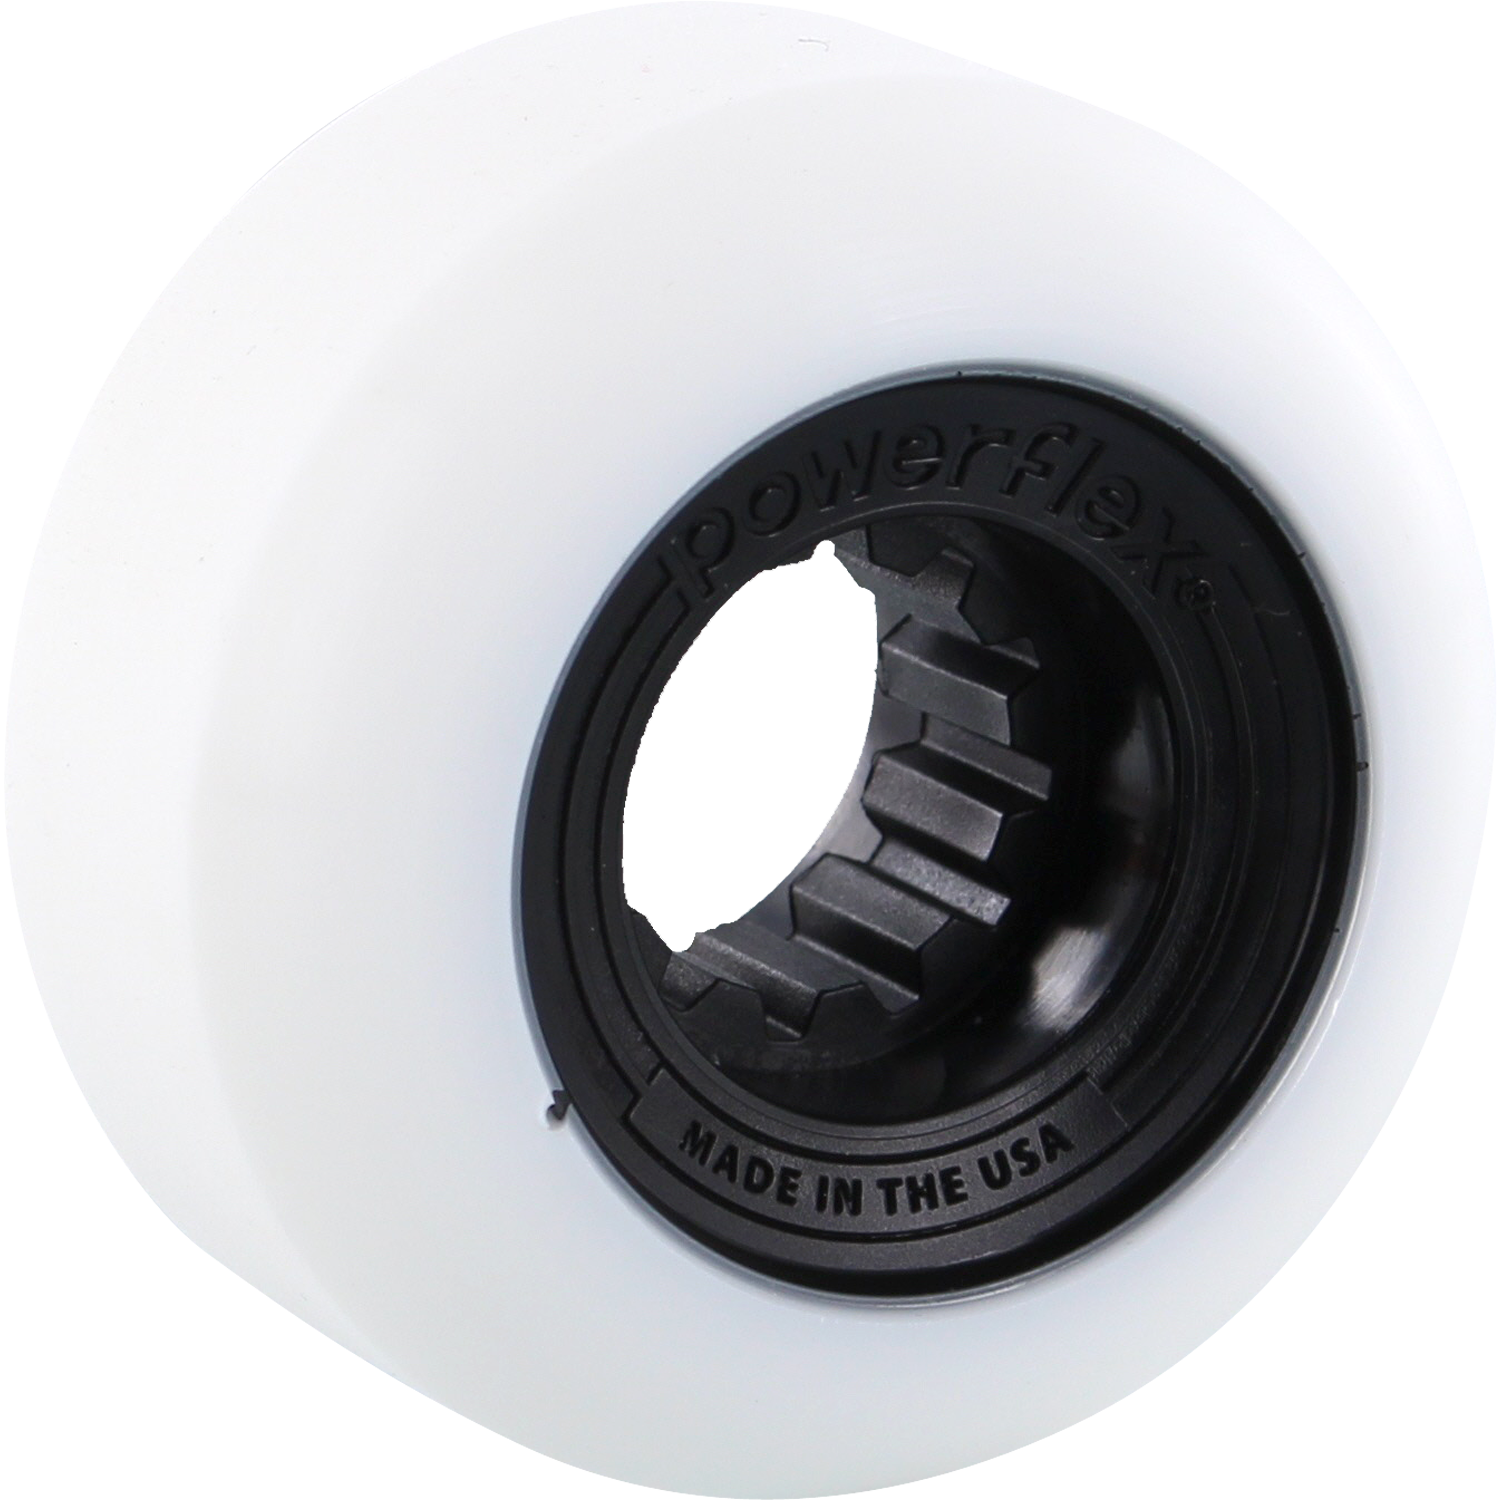 Powerflex Gumball 56mm 83b White/Black Skateboard Wheels (Set of 4)